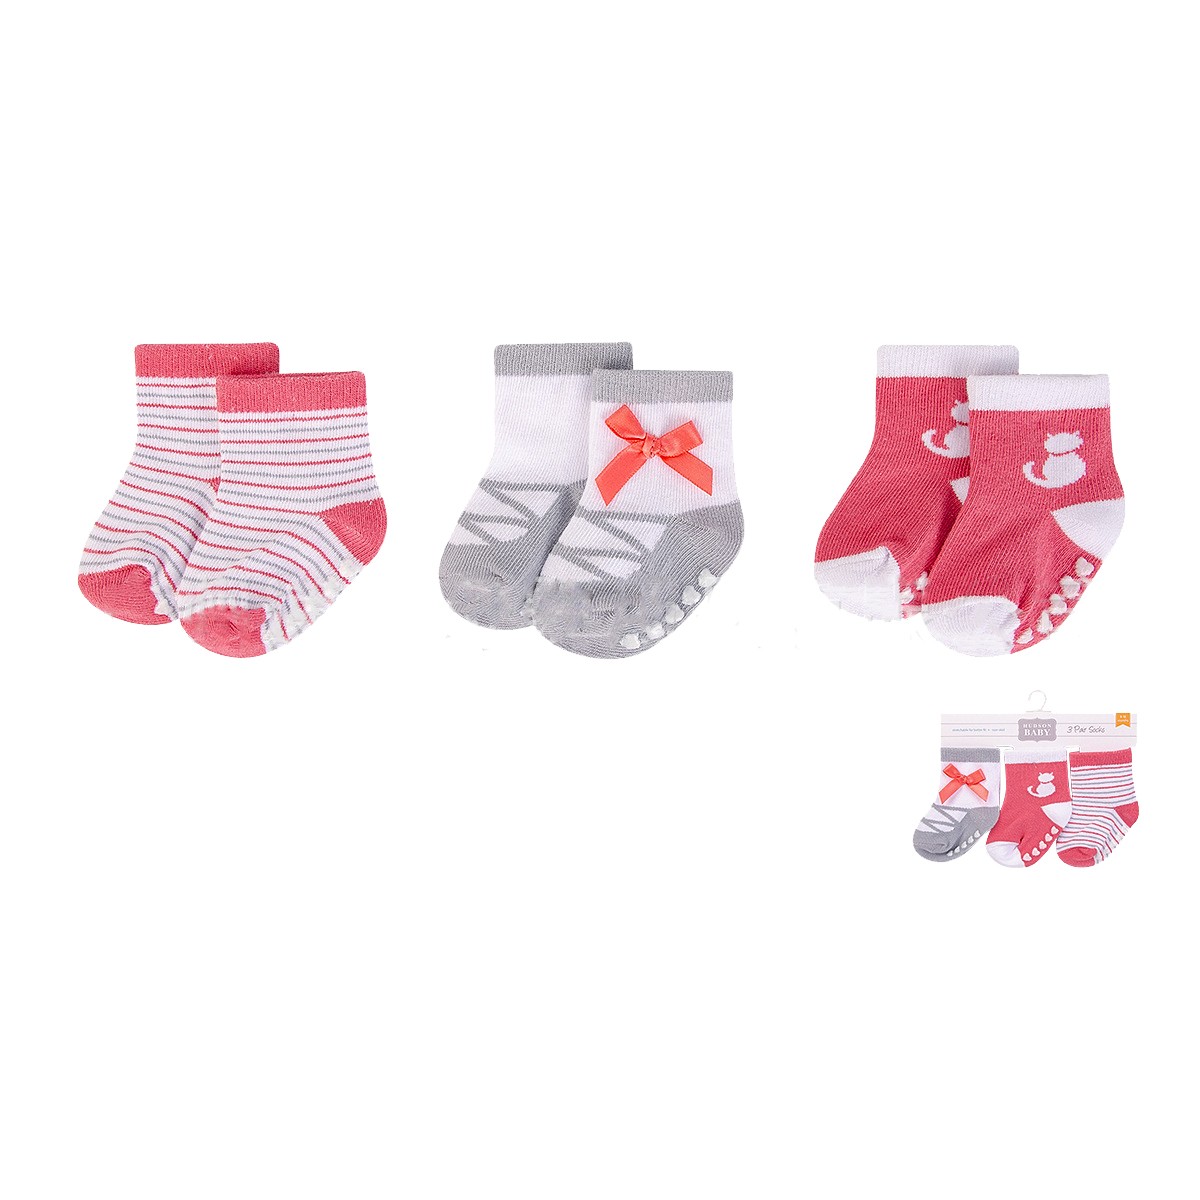 Hudson 00800 Baby Socks with Non-Skid 3pcs (0-9M/9-18M/18-36M)